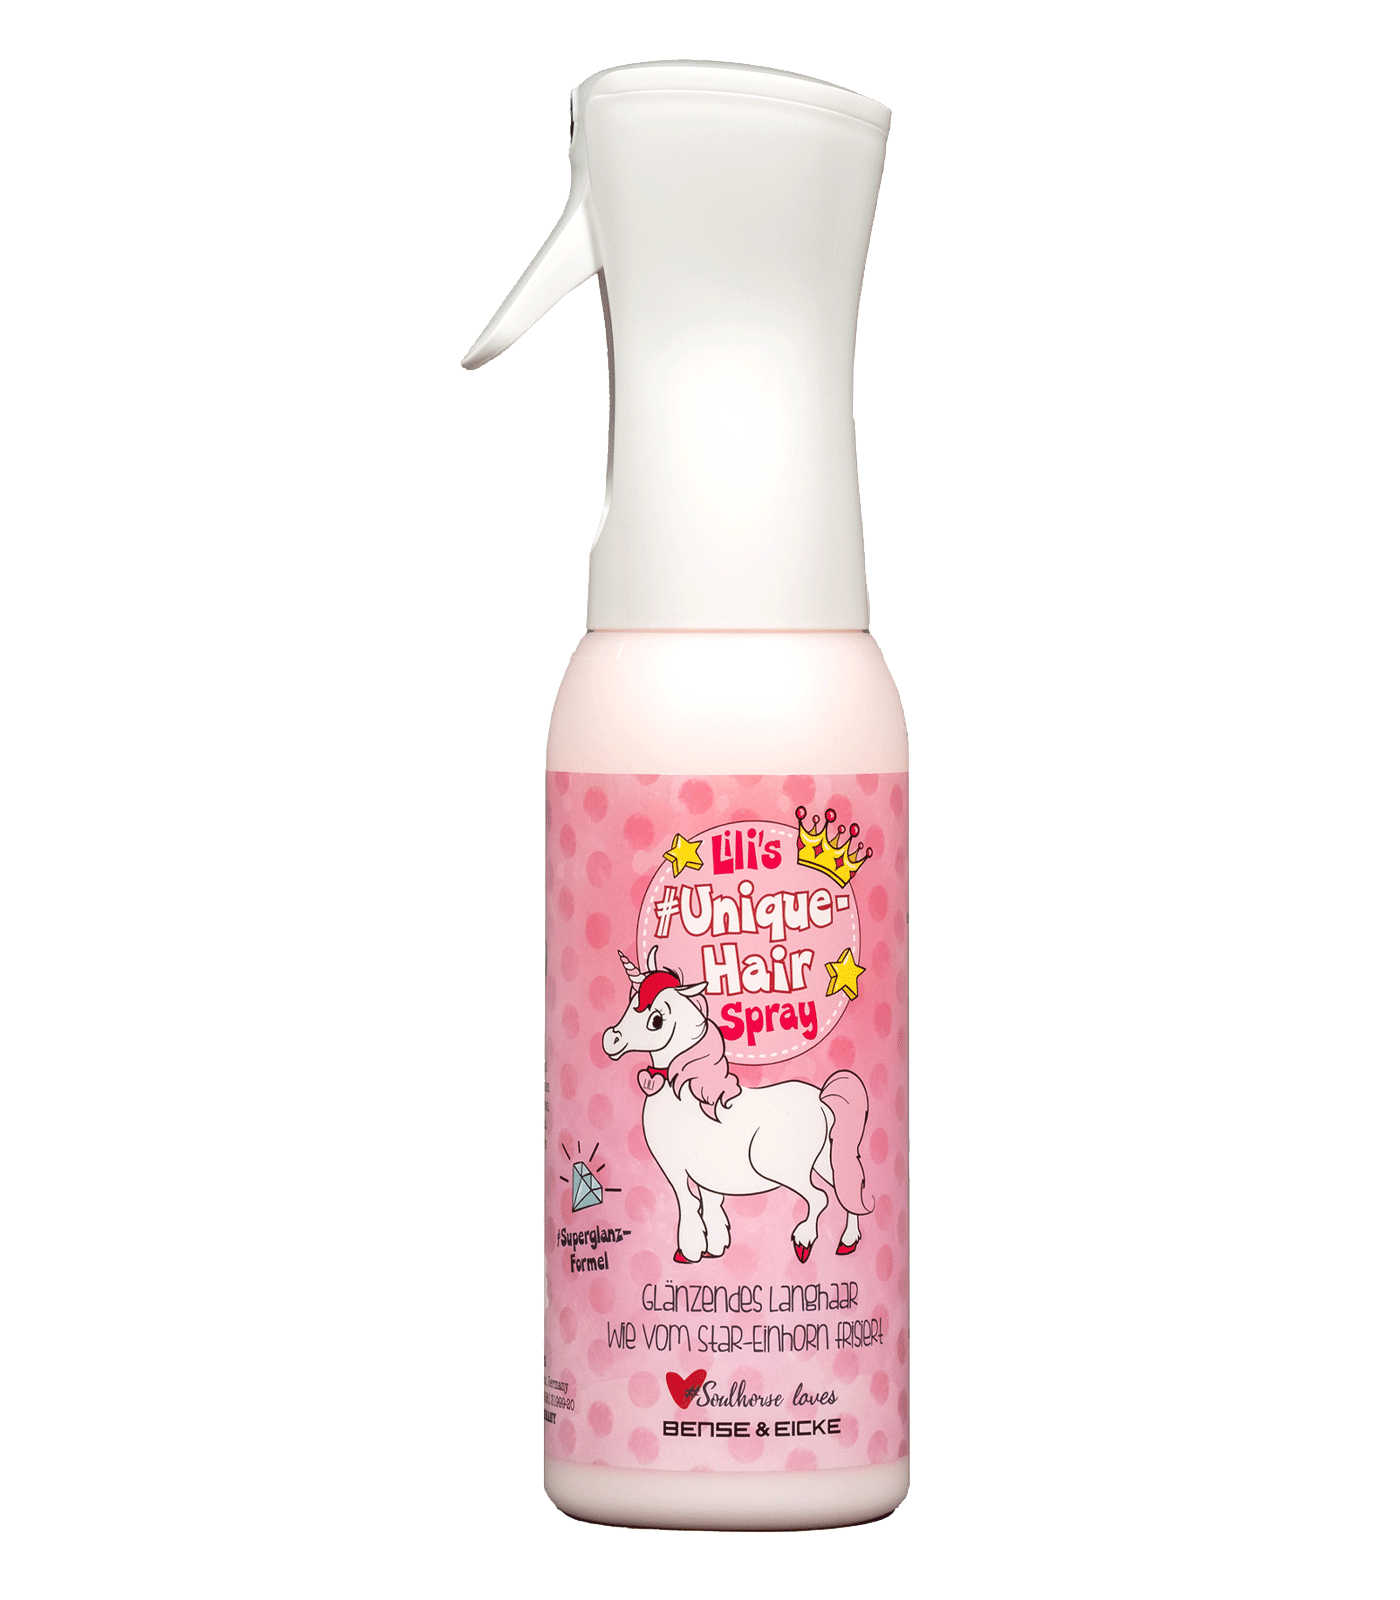 Spray Lili’ s #Unique-Hair Soulhorse